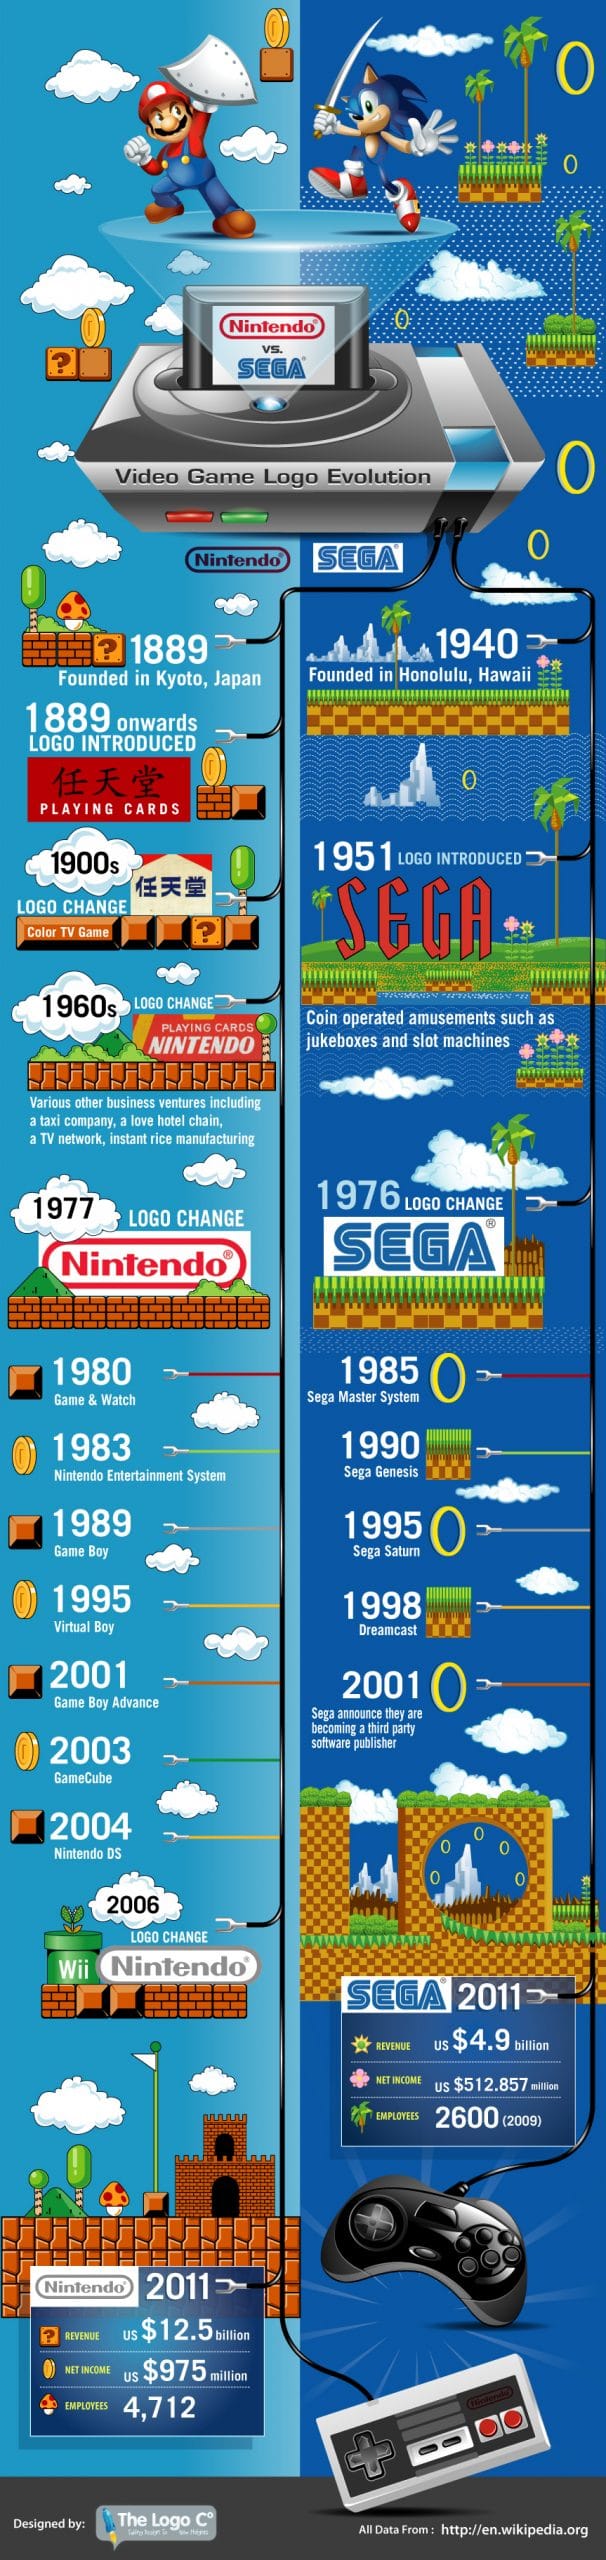 Infographic of the evolution of the game logo designs Nintendo vs Sega